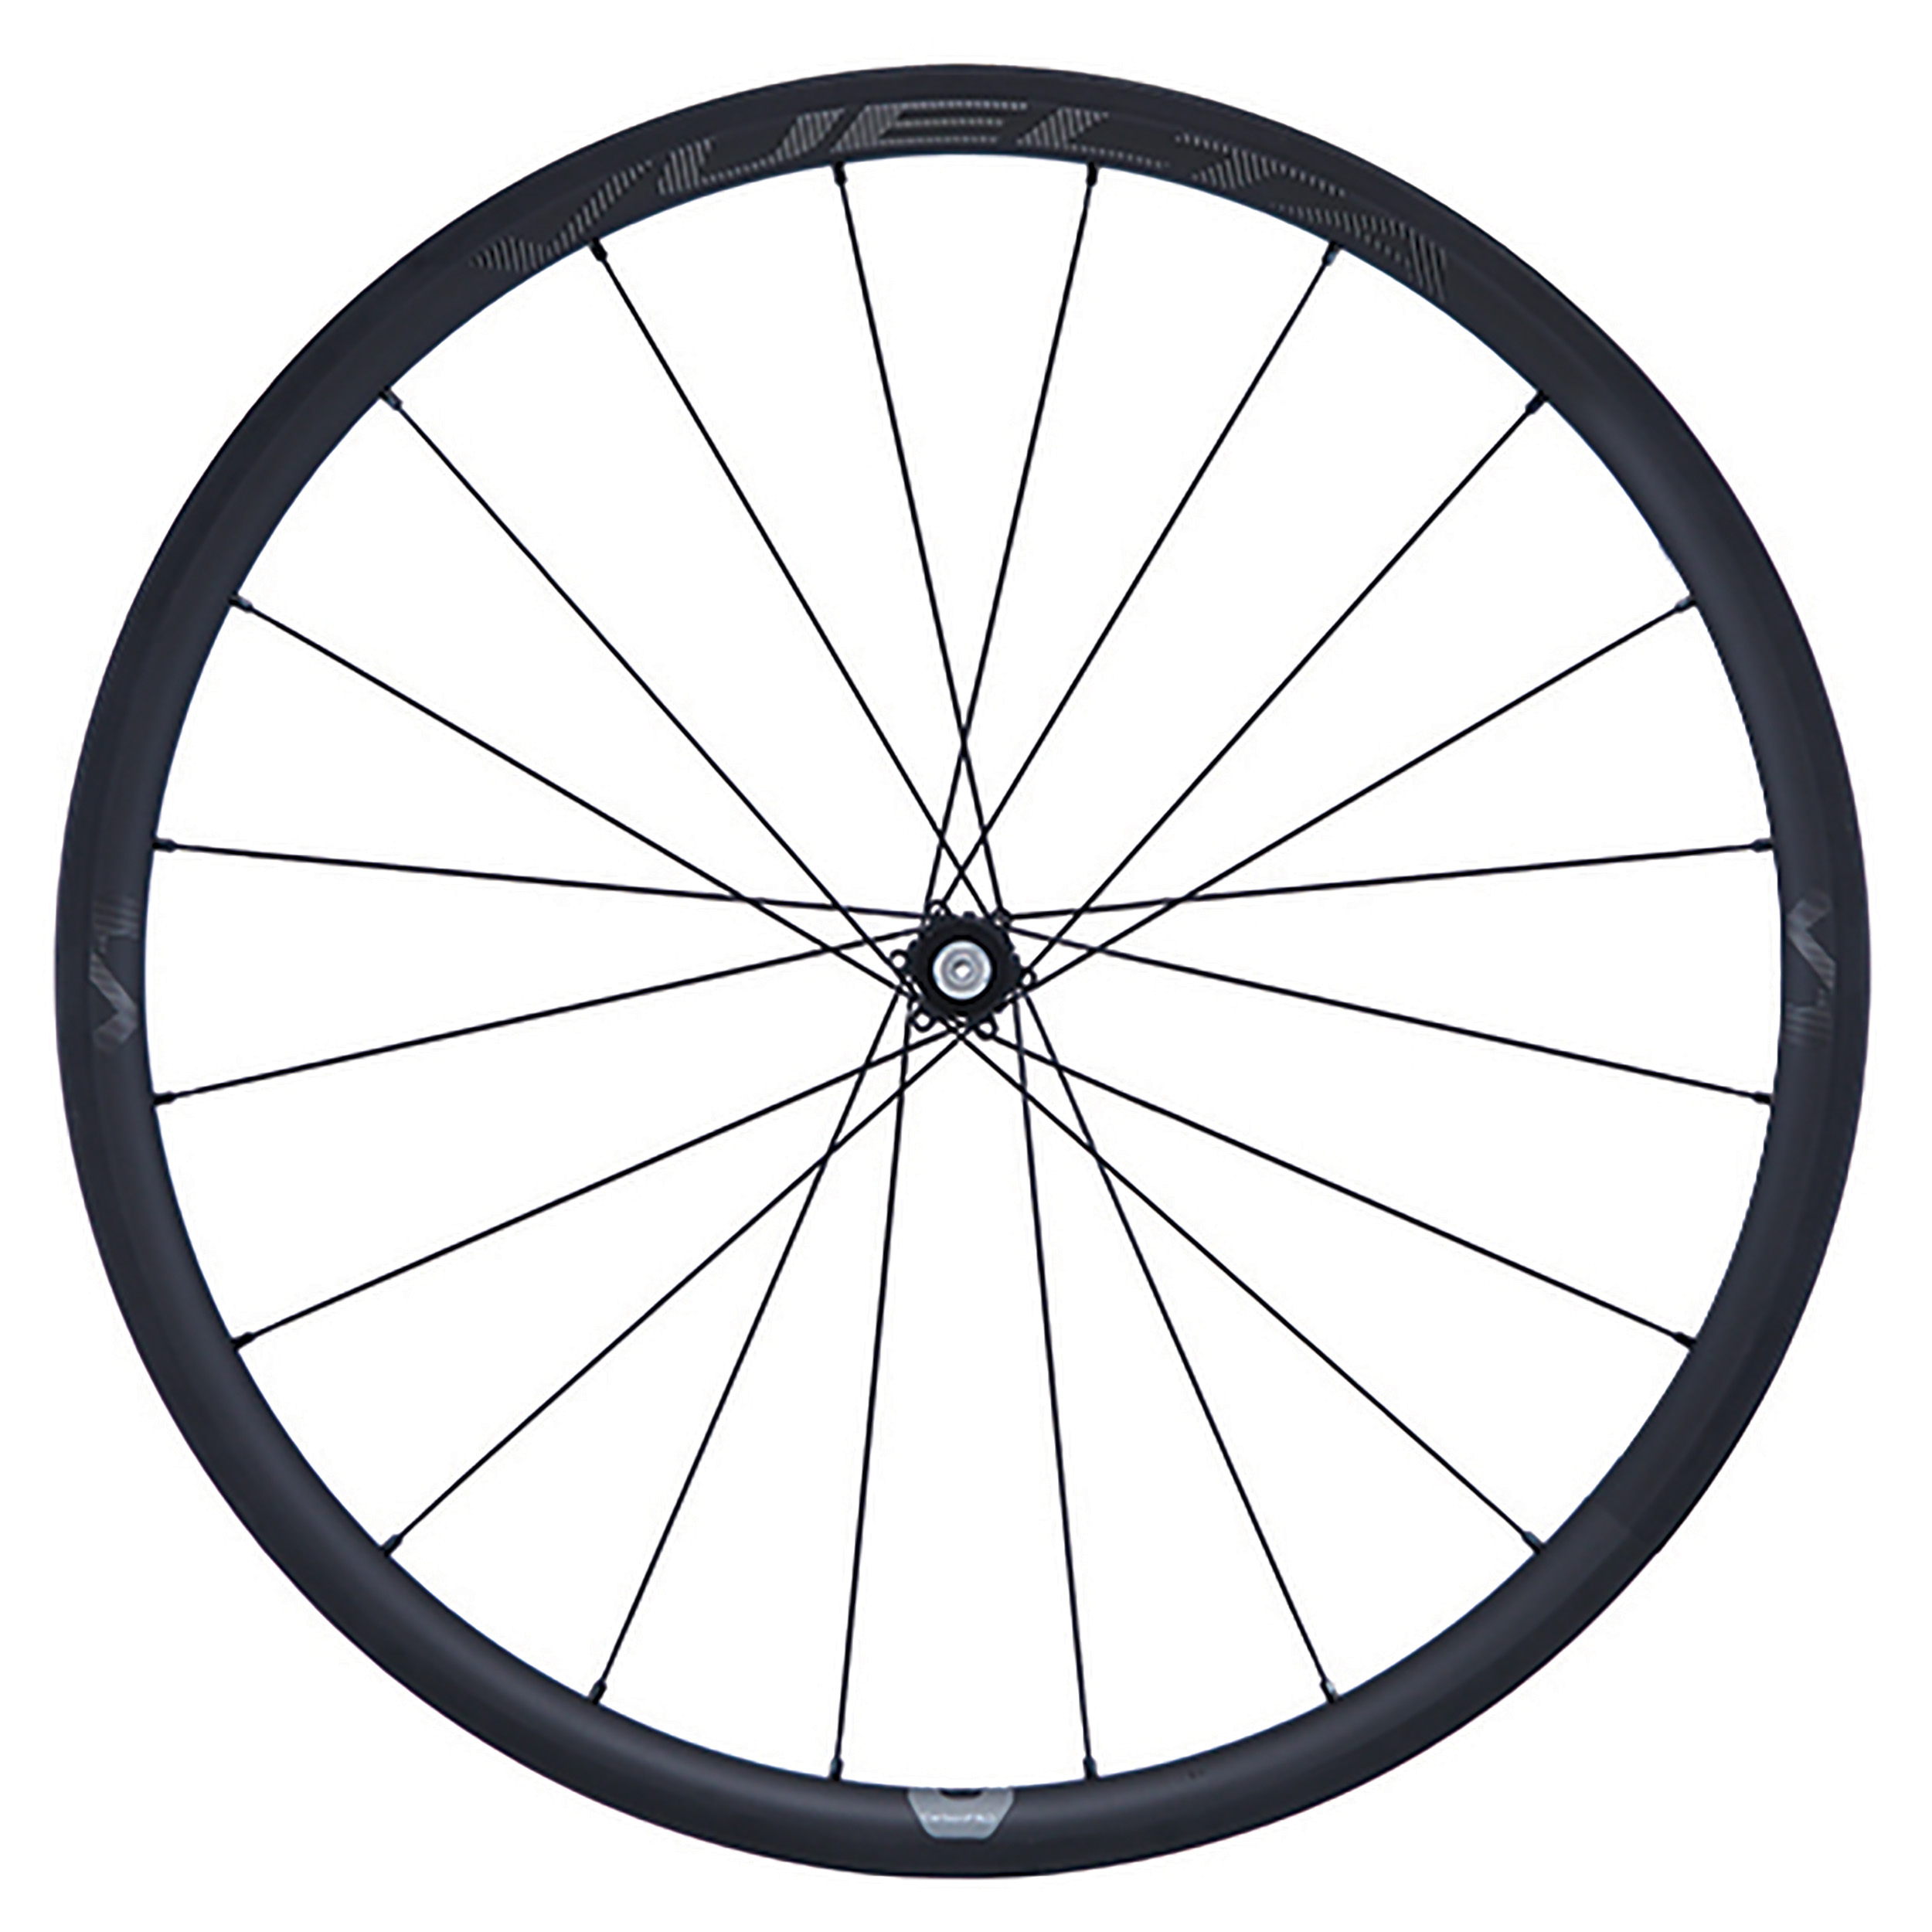 Vuelta Carbon Pro V1 700 cm Handbuilt Clincher Front Road Wheel - image 1 of 1